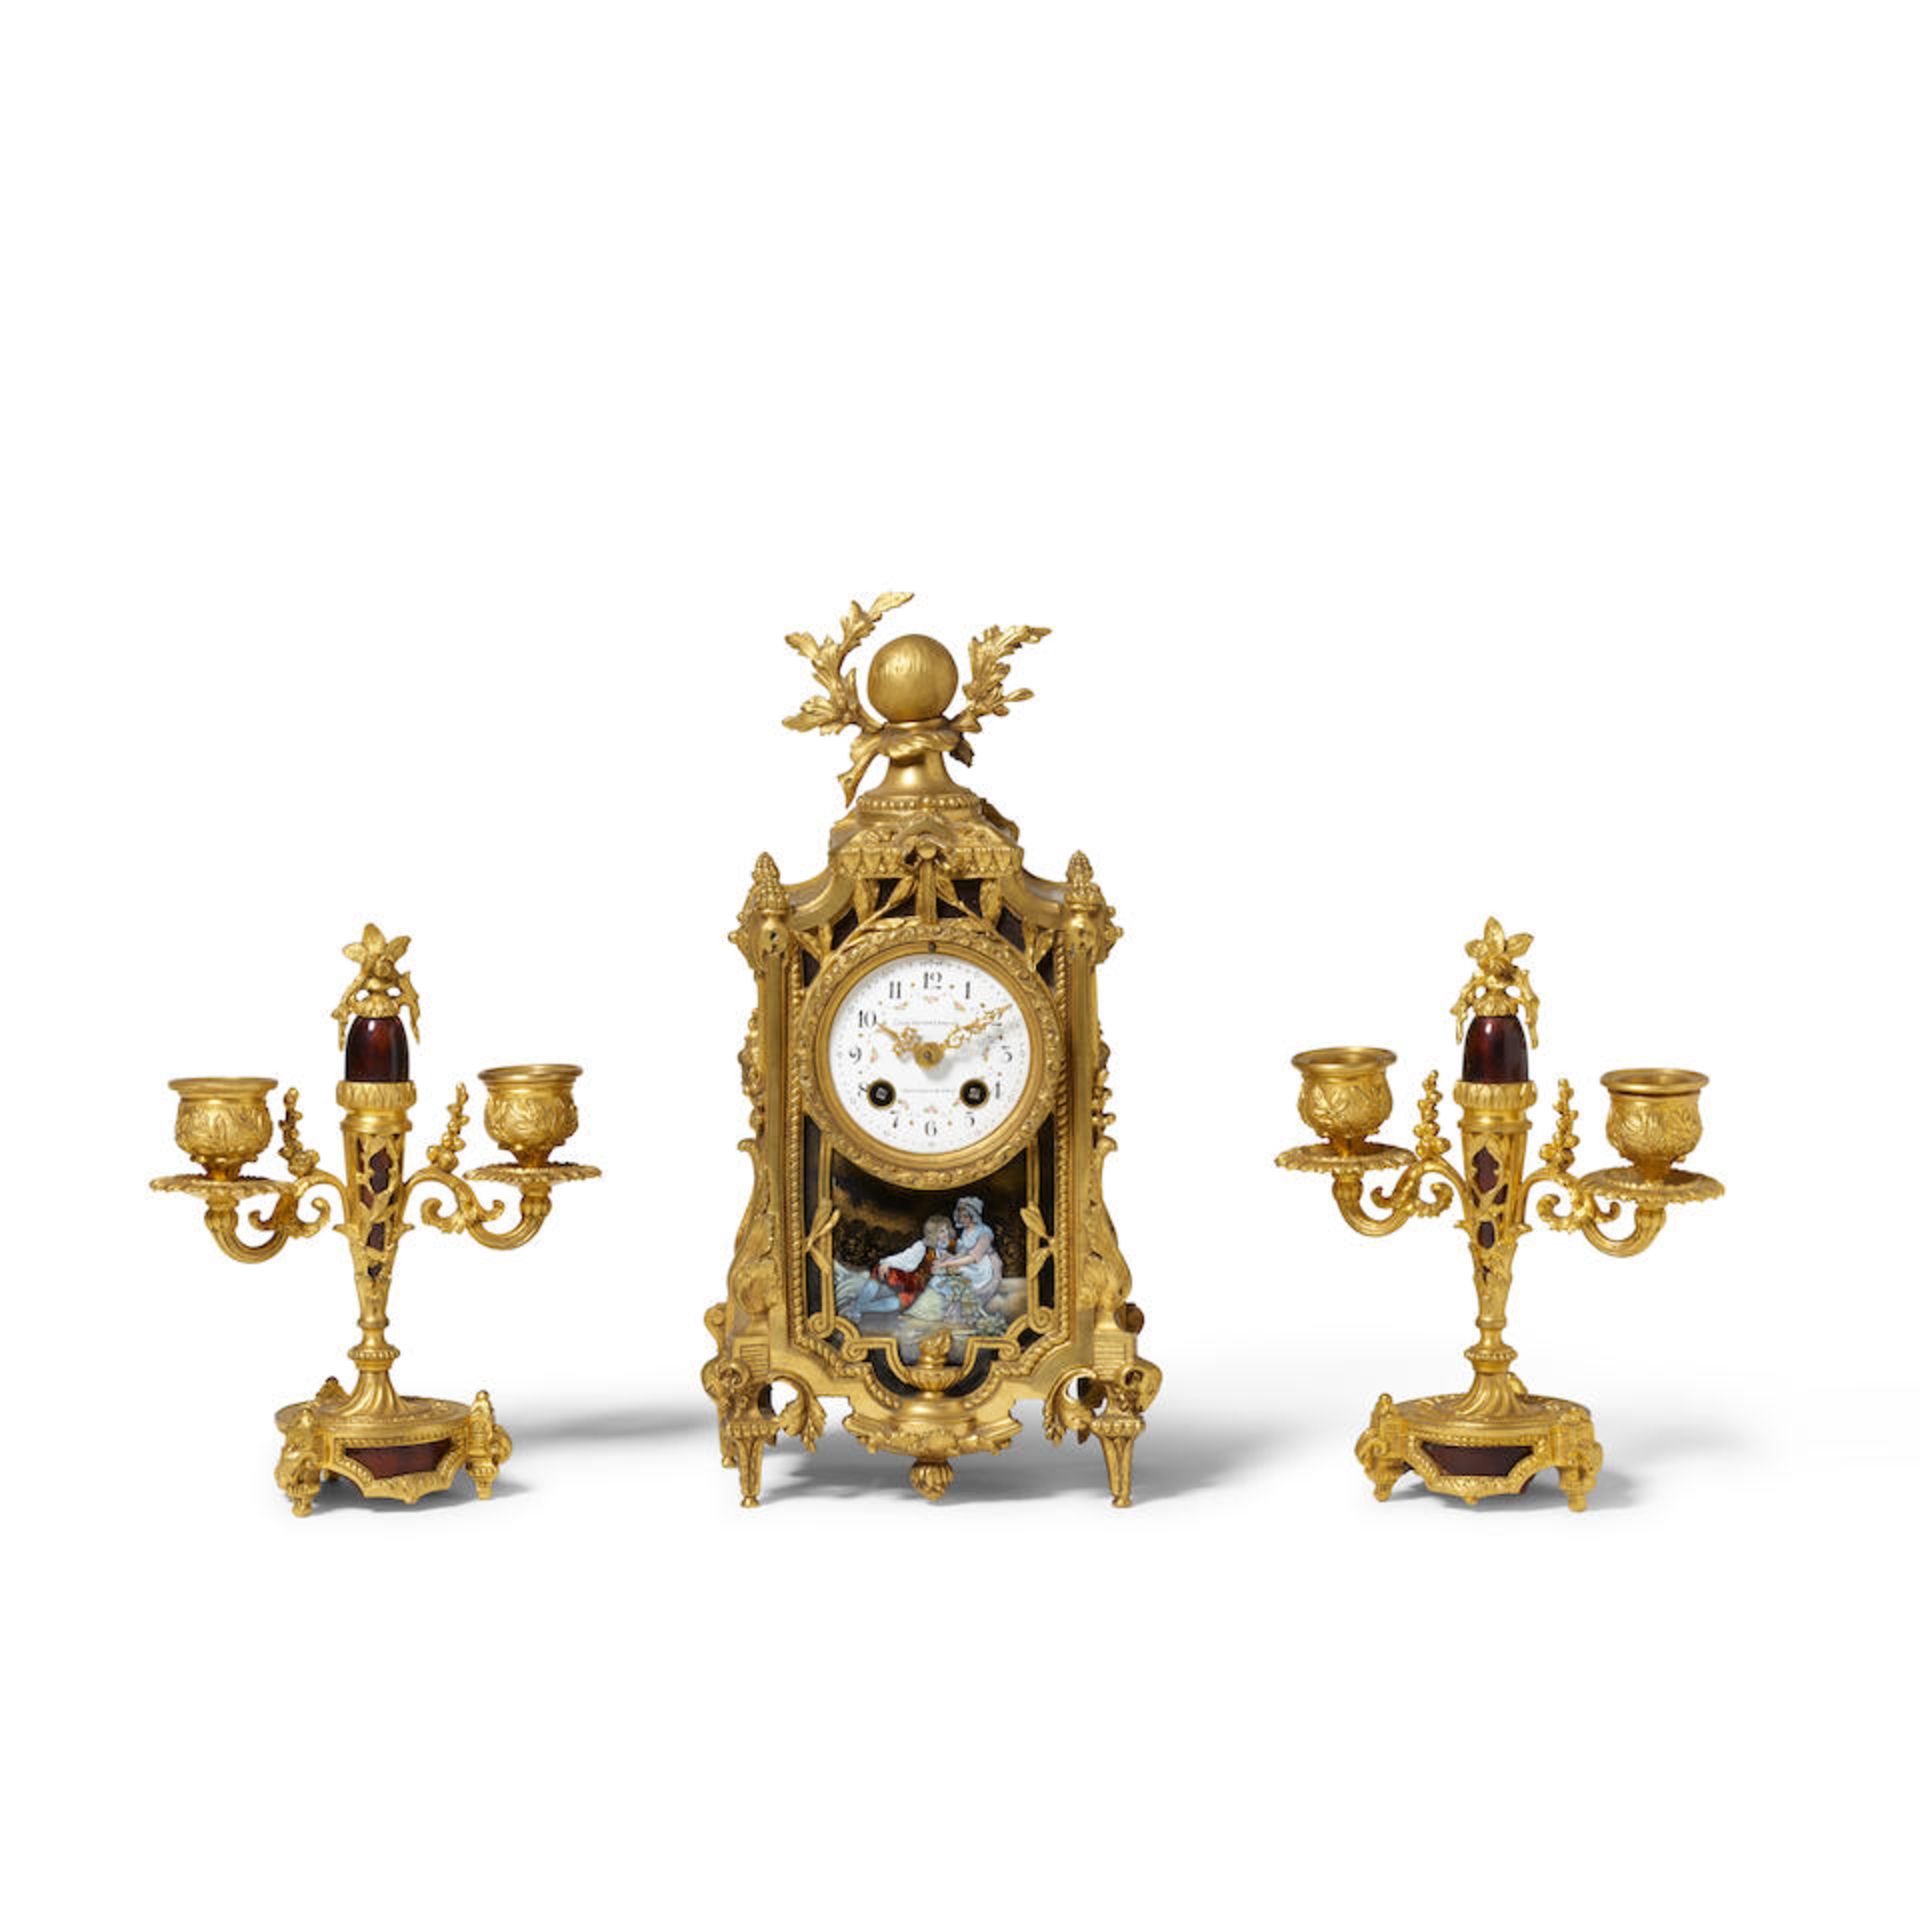 A LOUIS XVI STYLE GILT BRONZE AND ENAMEL THREE-PIECE CLOCK GARNITURE20th century